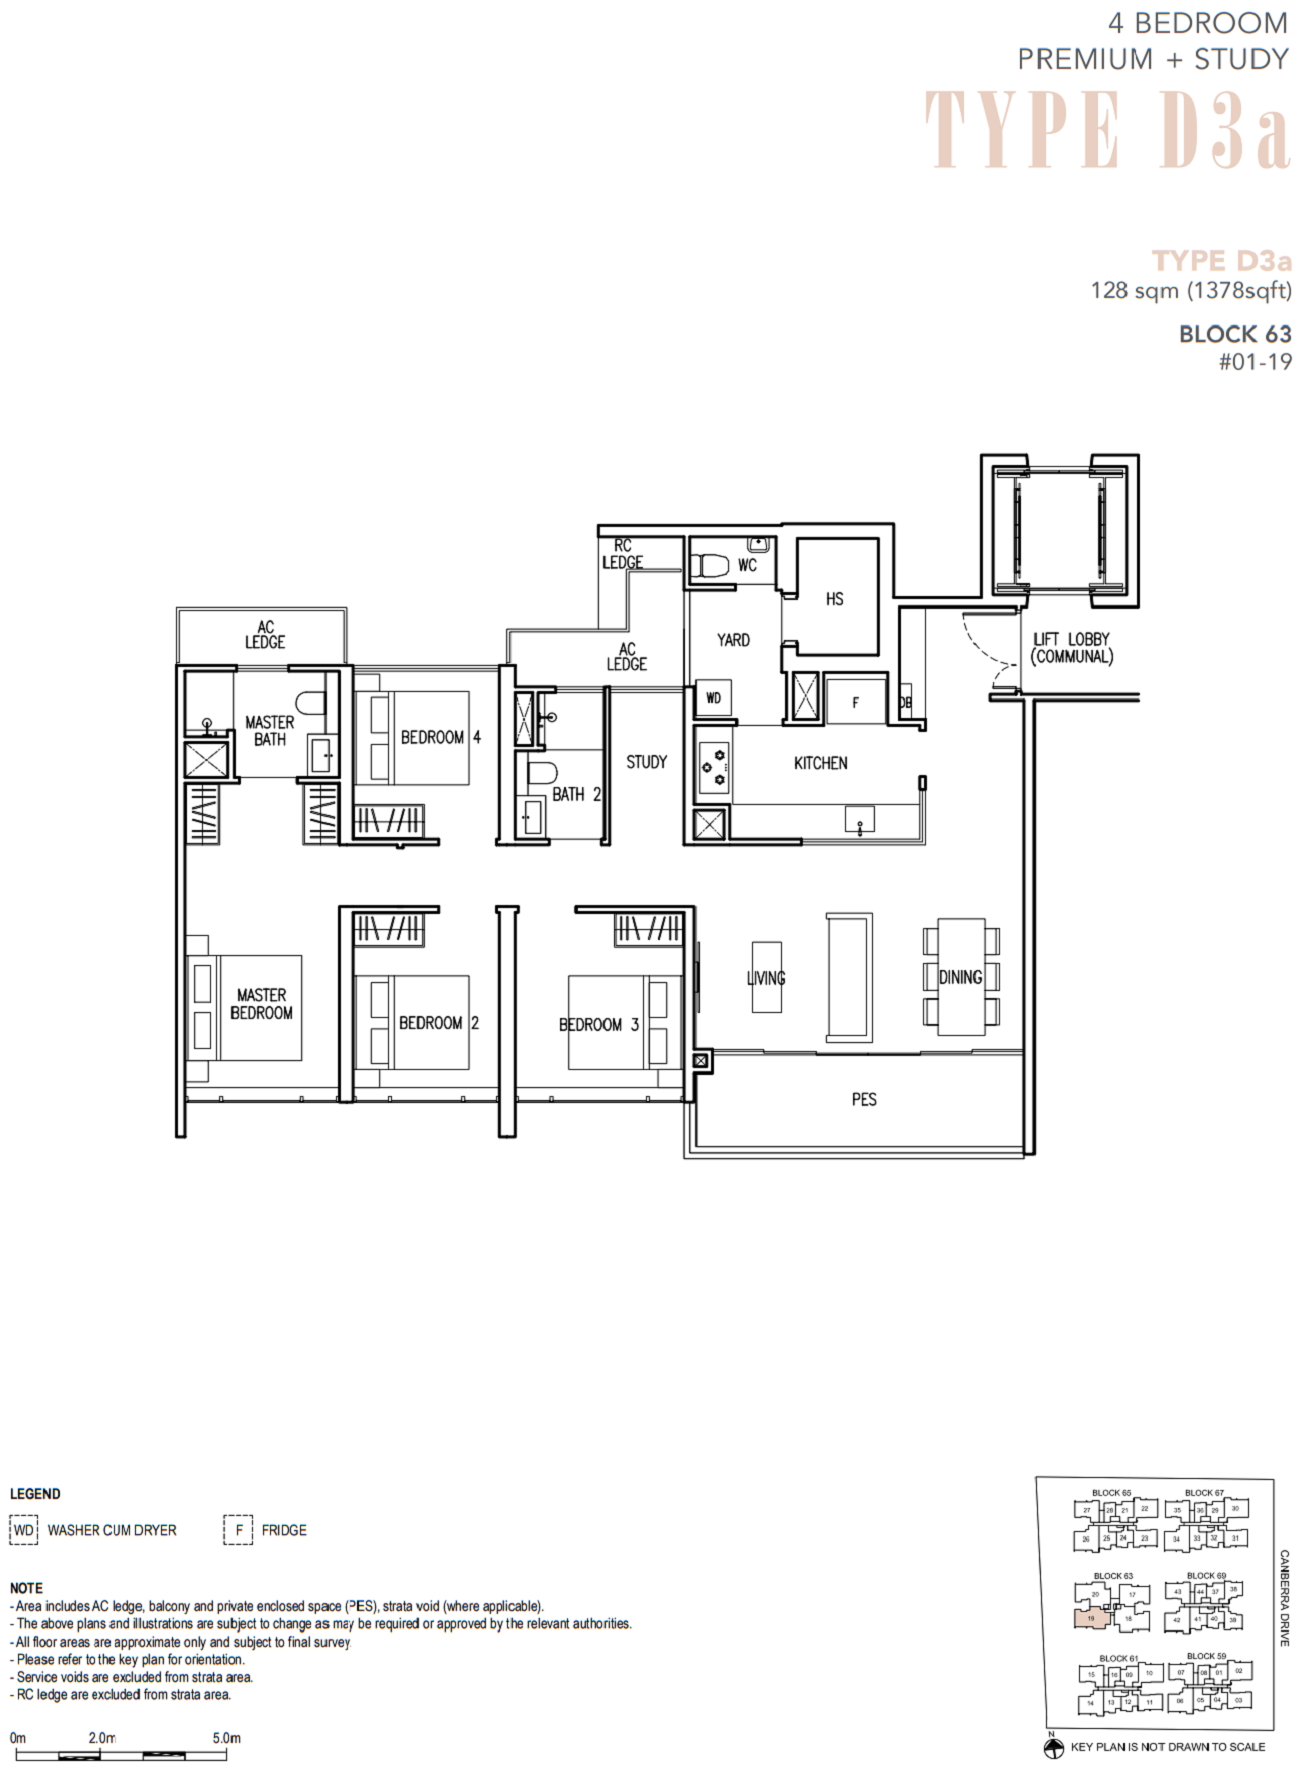 The Commodore Floor Plan 4 Bedroom Premium_Study Type D3a 128_1378